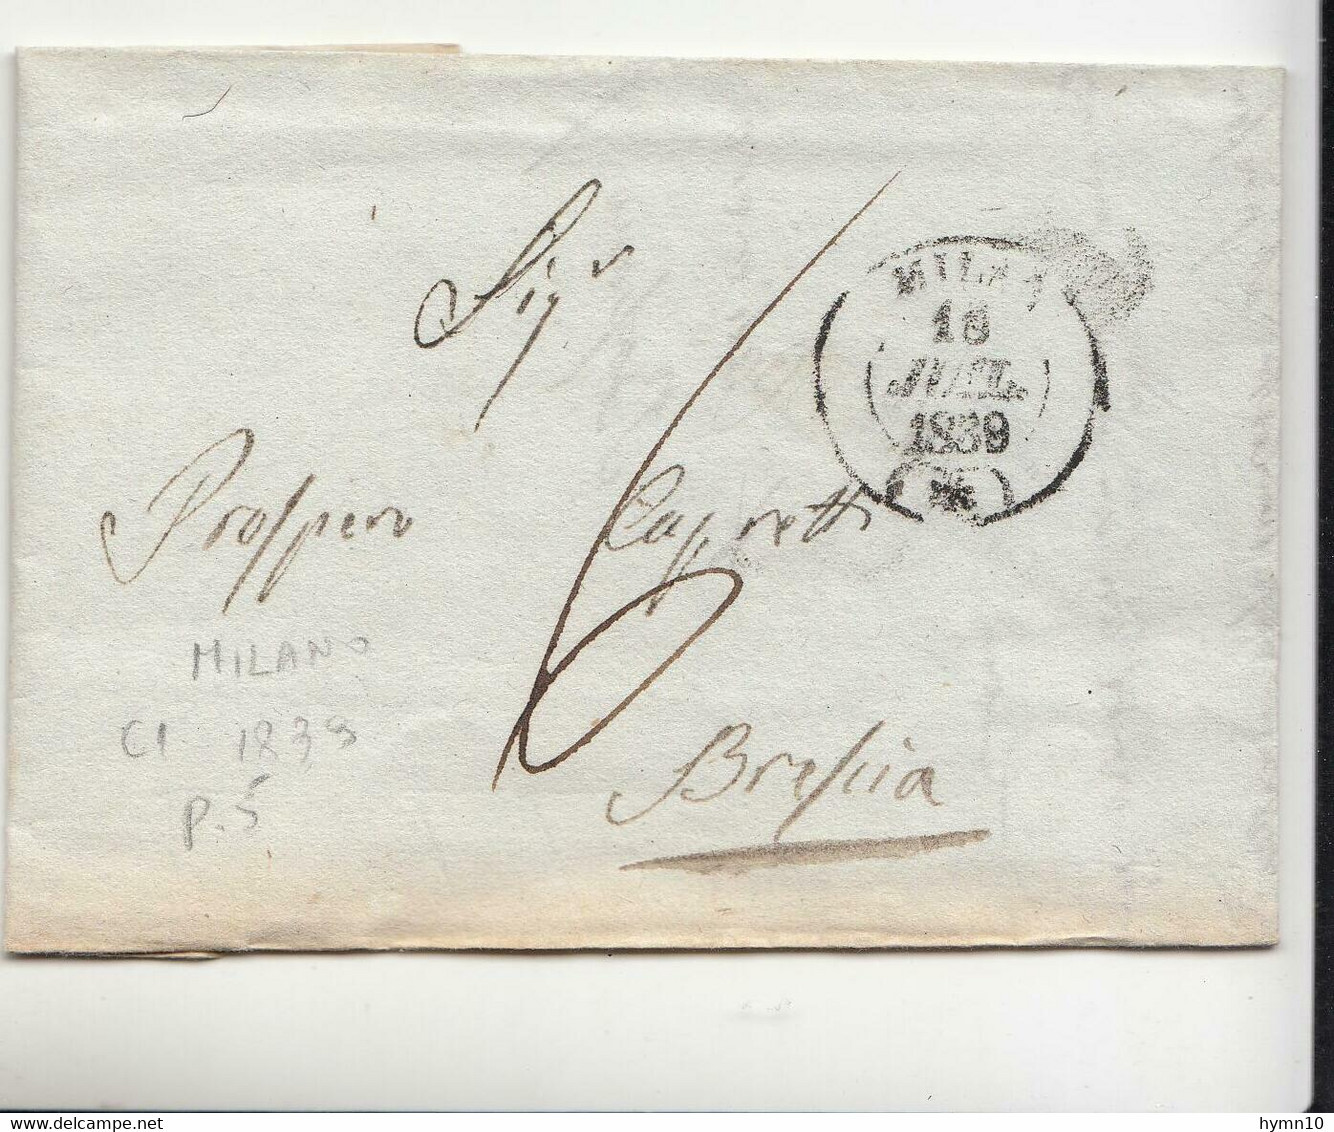 1833 LOMBARDO-VENETO Lettera MILANO-BRESCIA+tumbro DOPPIO CERCHIO GRANDE MILAN+tassa 6 Kreuzer -MM493 - 1. ...-1850 Vorphilatelie